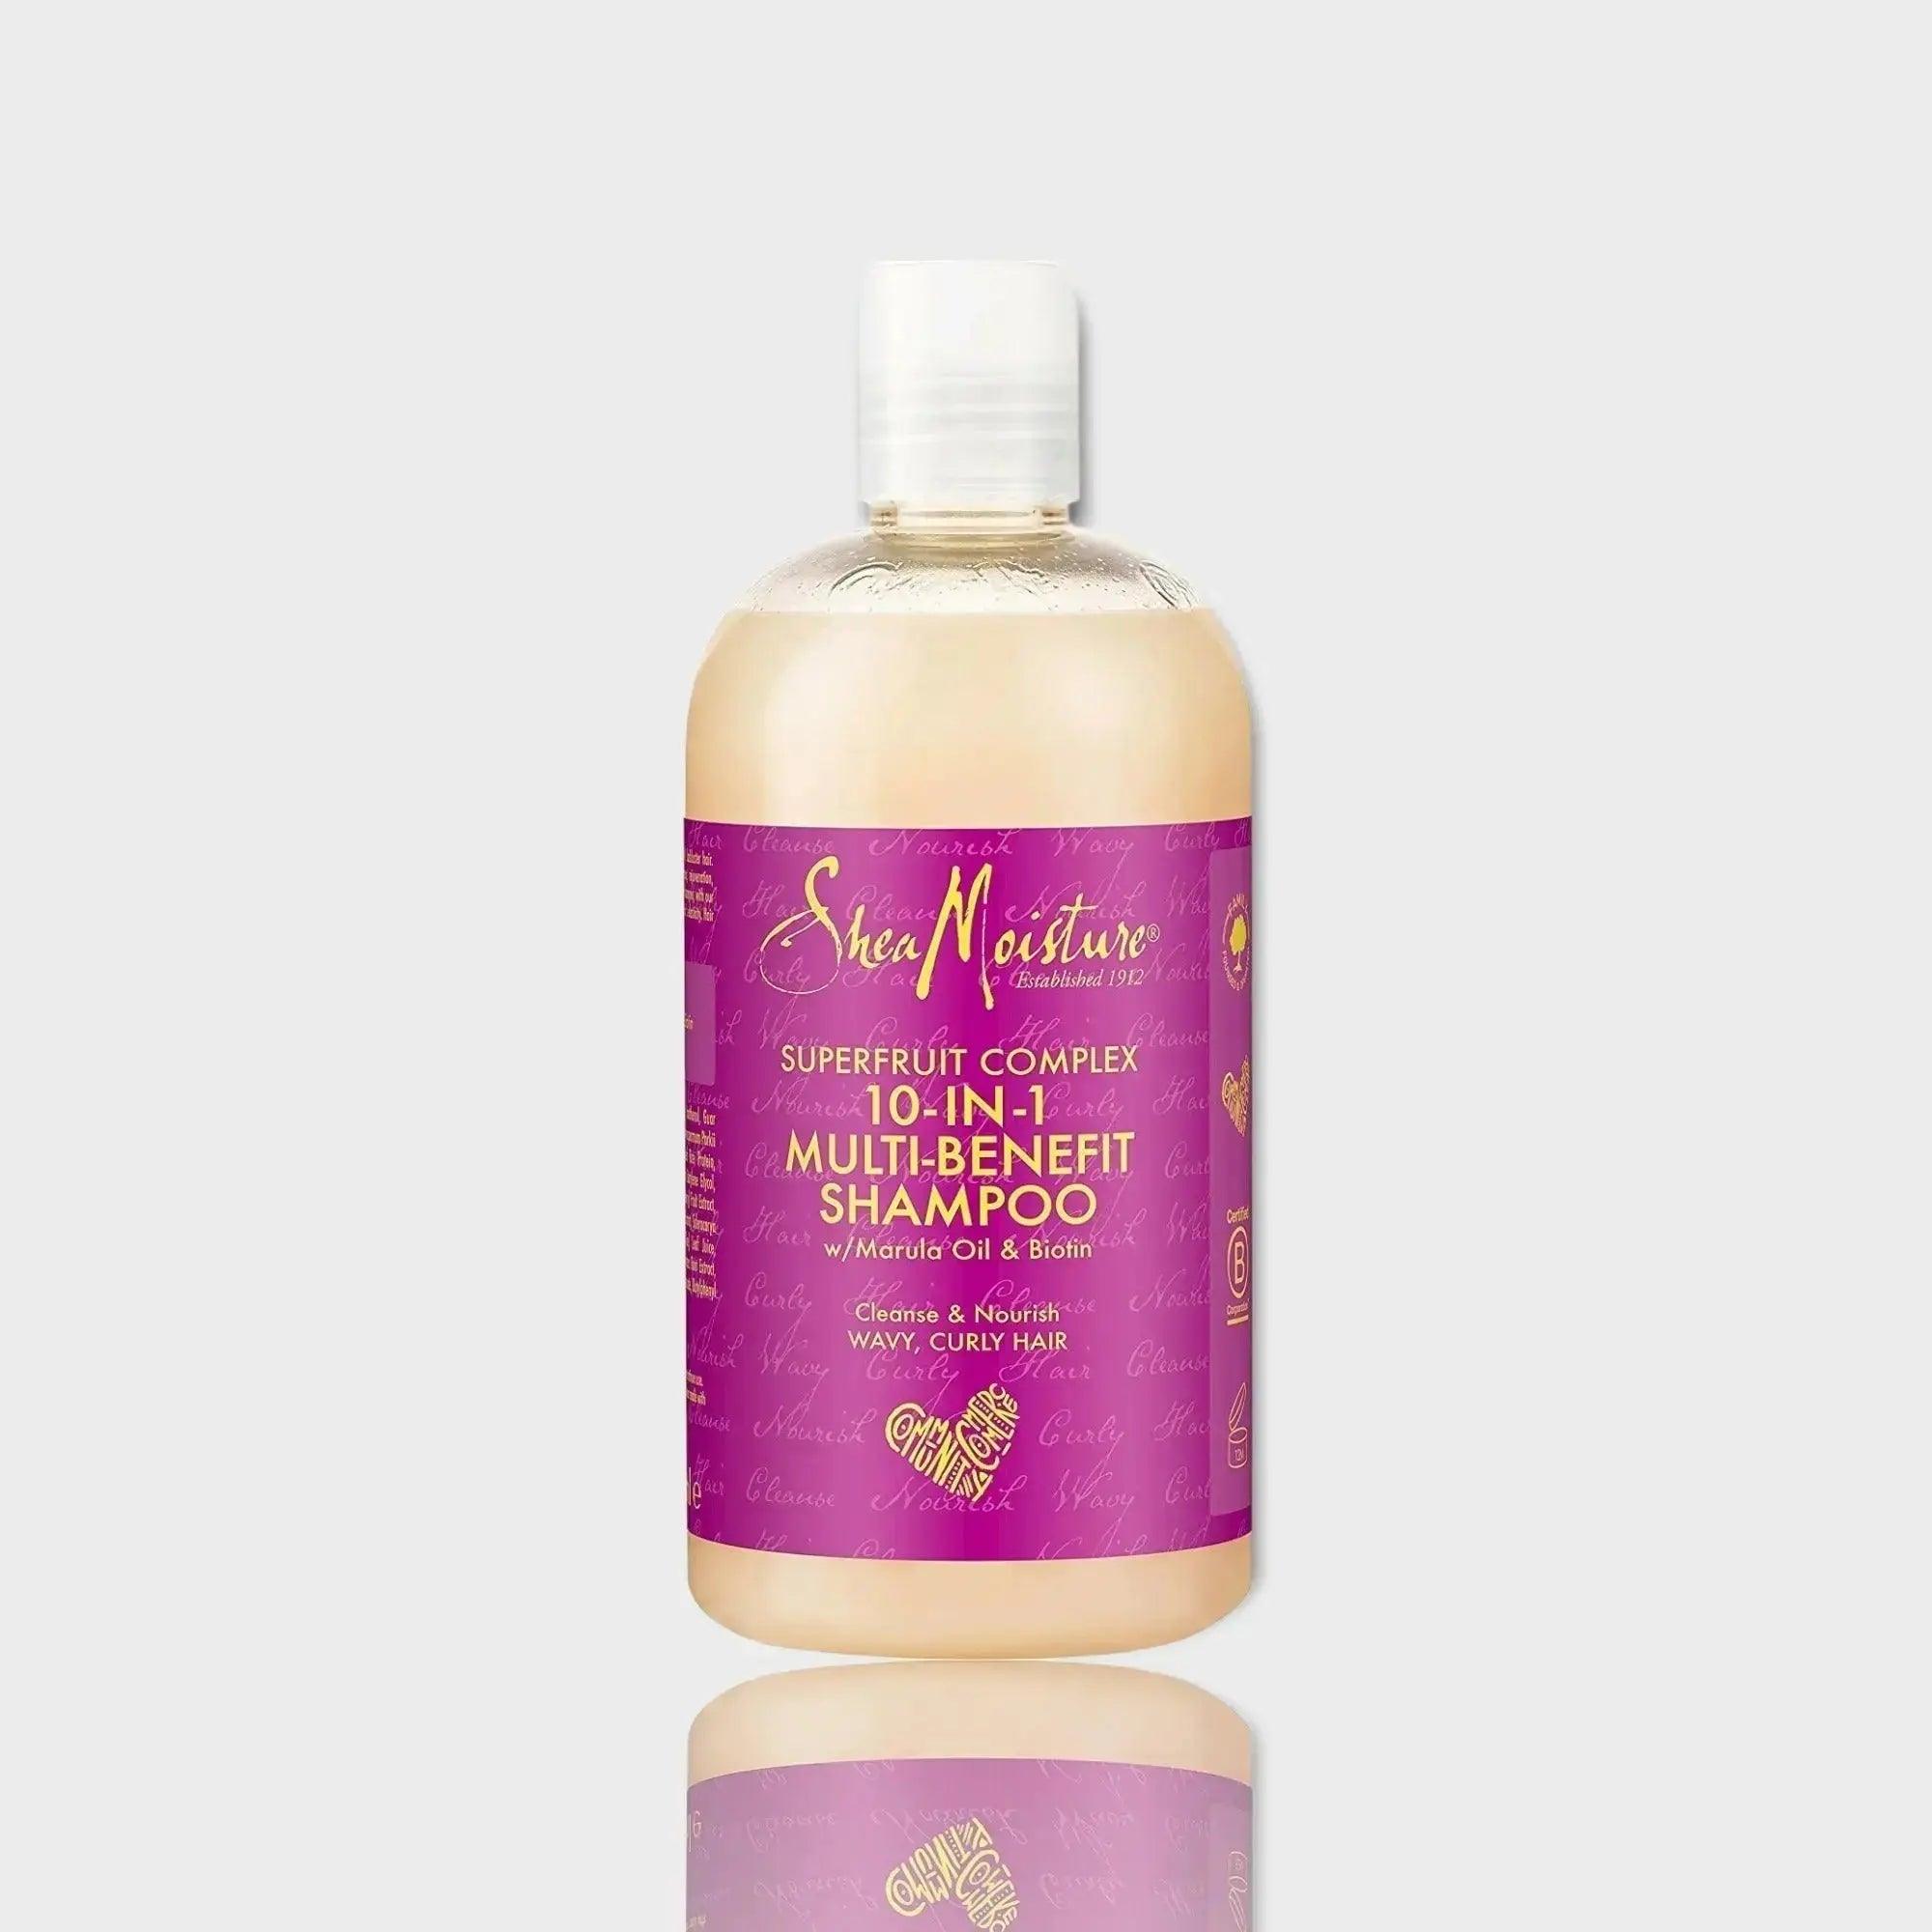 Shea Moisture Super fruit Shampoo 10-in-1 Multi Benefit Shampoo 379ml - Honesty Sales U.K